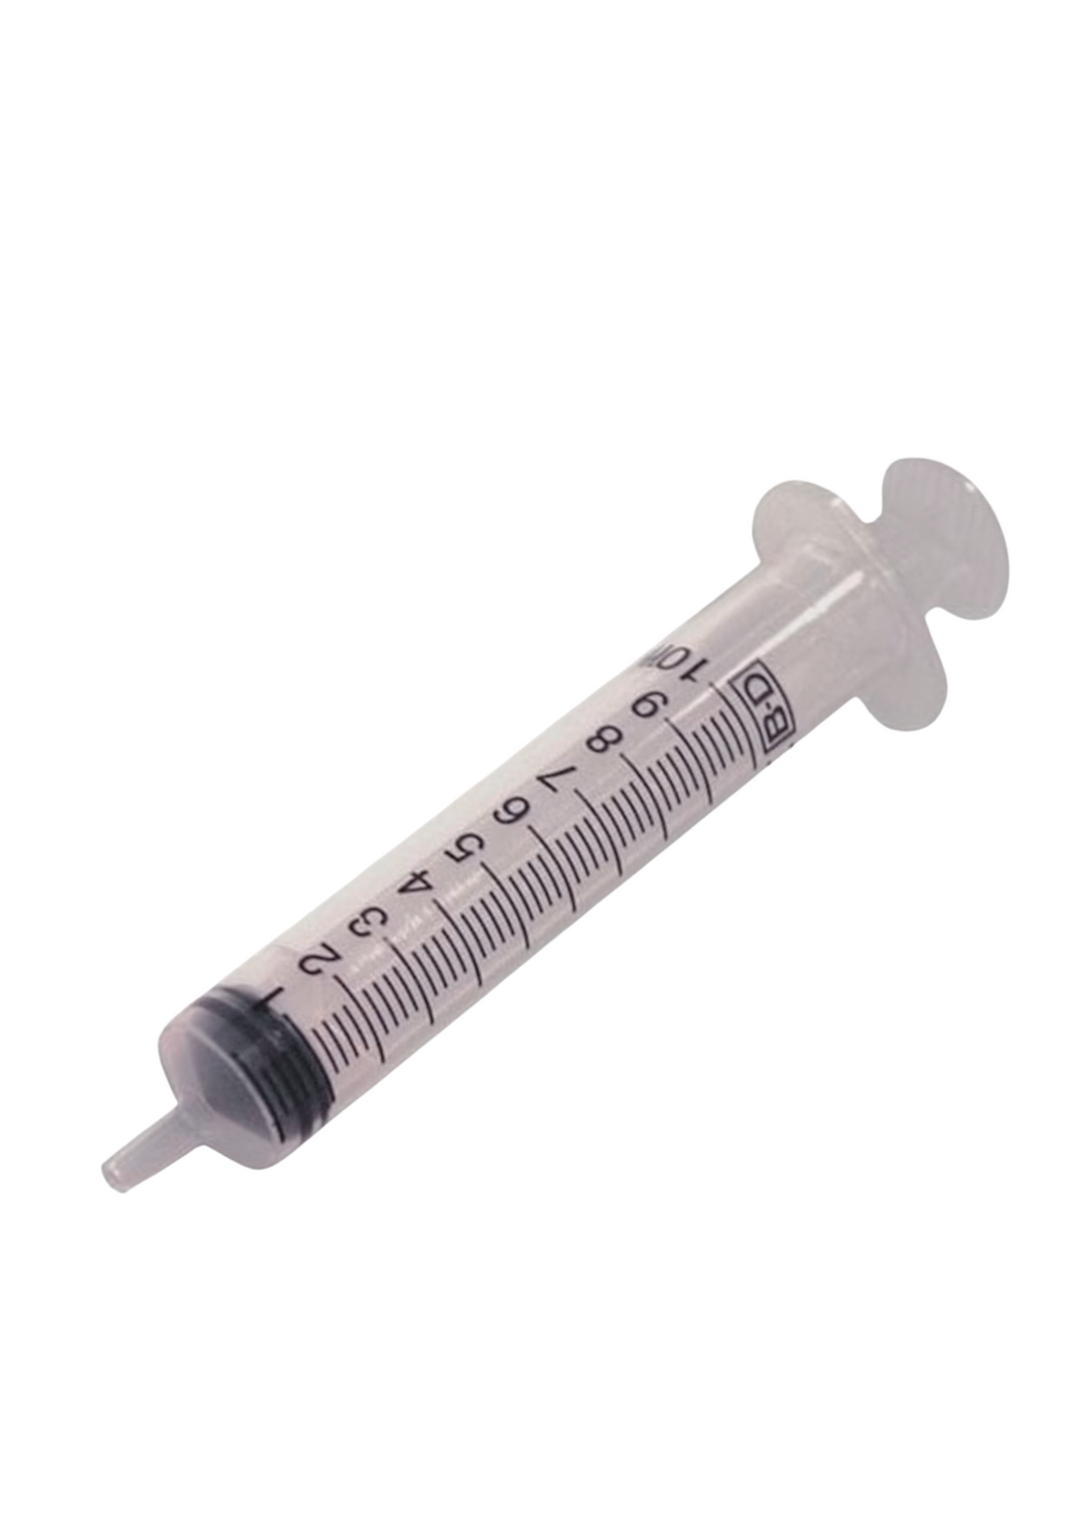 BD Syringe 10ml